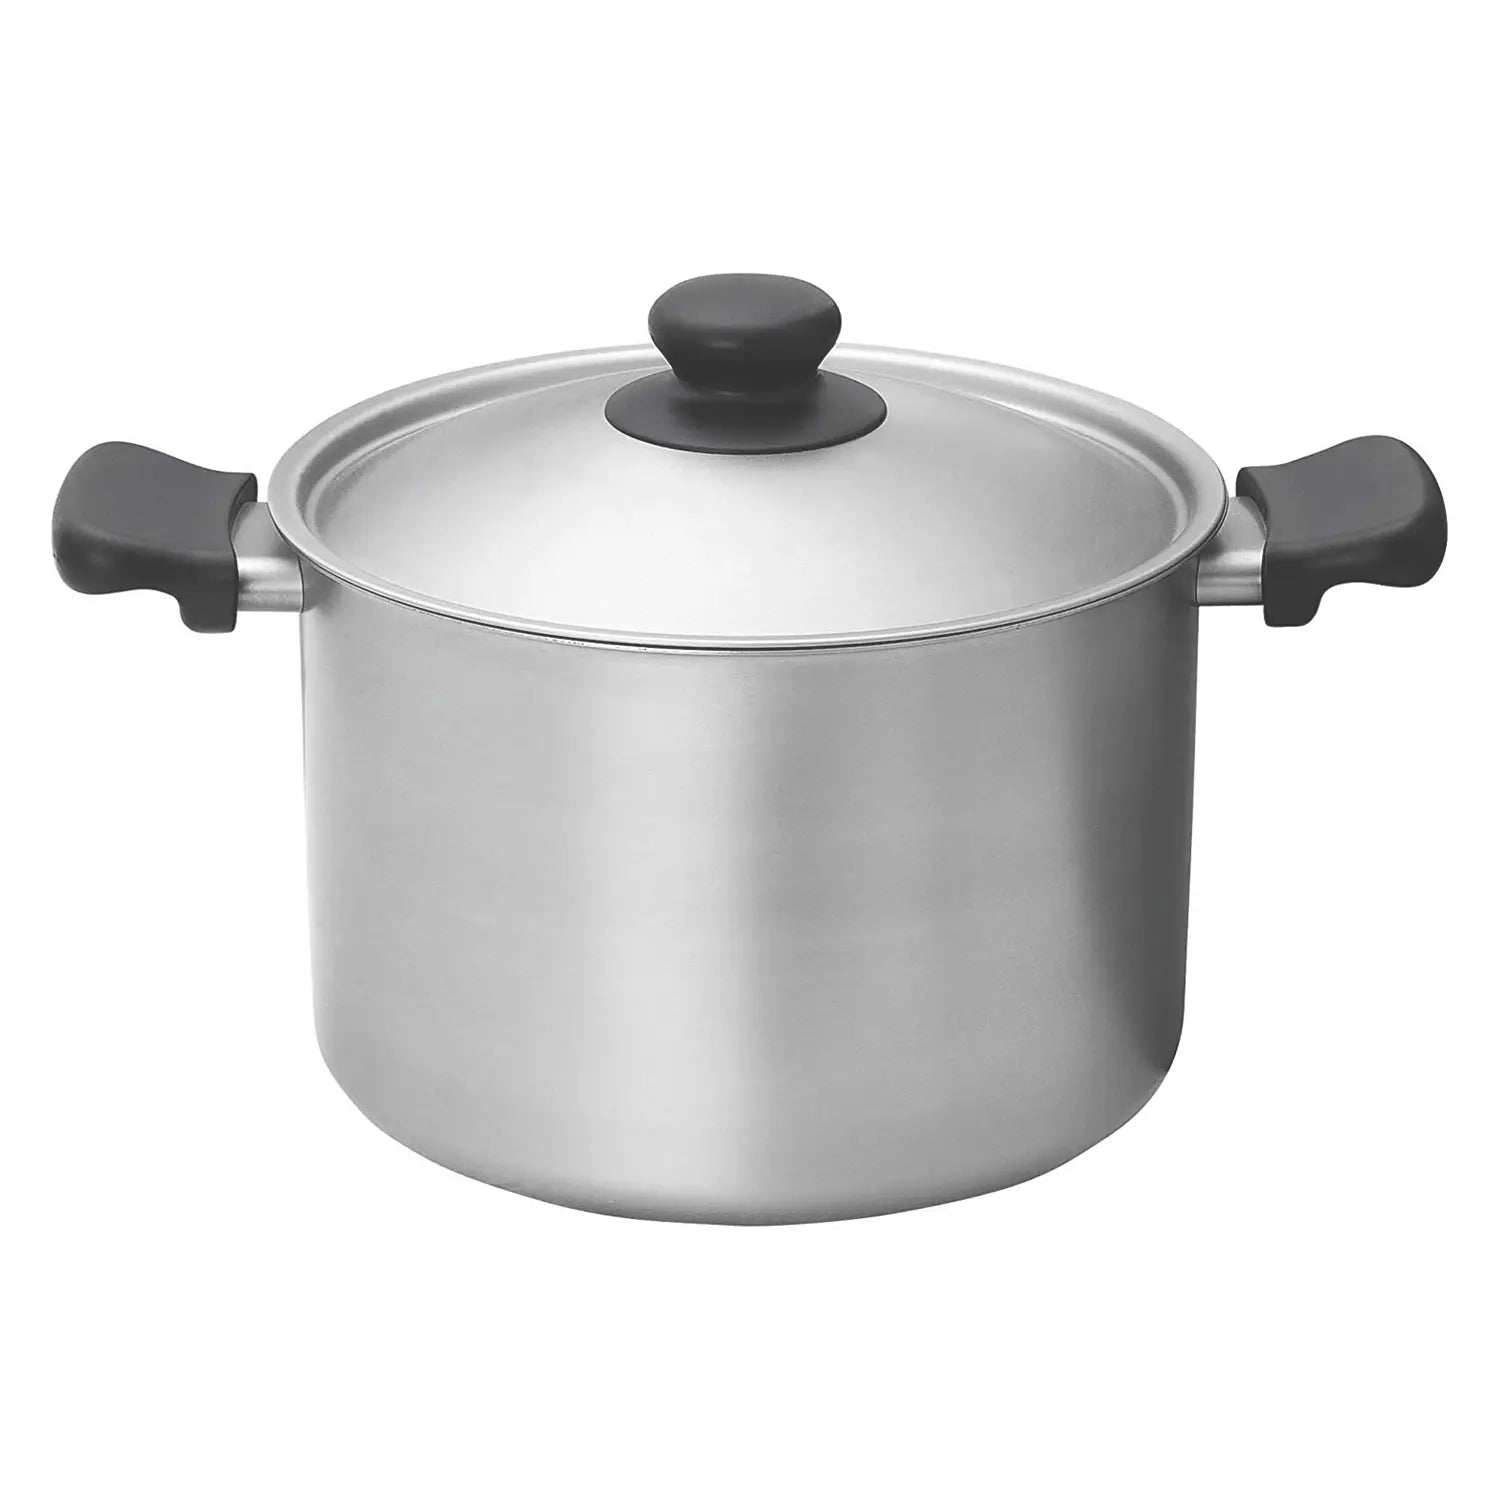 YUKIWA Stainless Steel Shabu Shabu Hot Pot with Divider